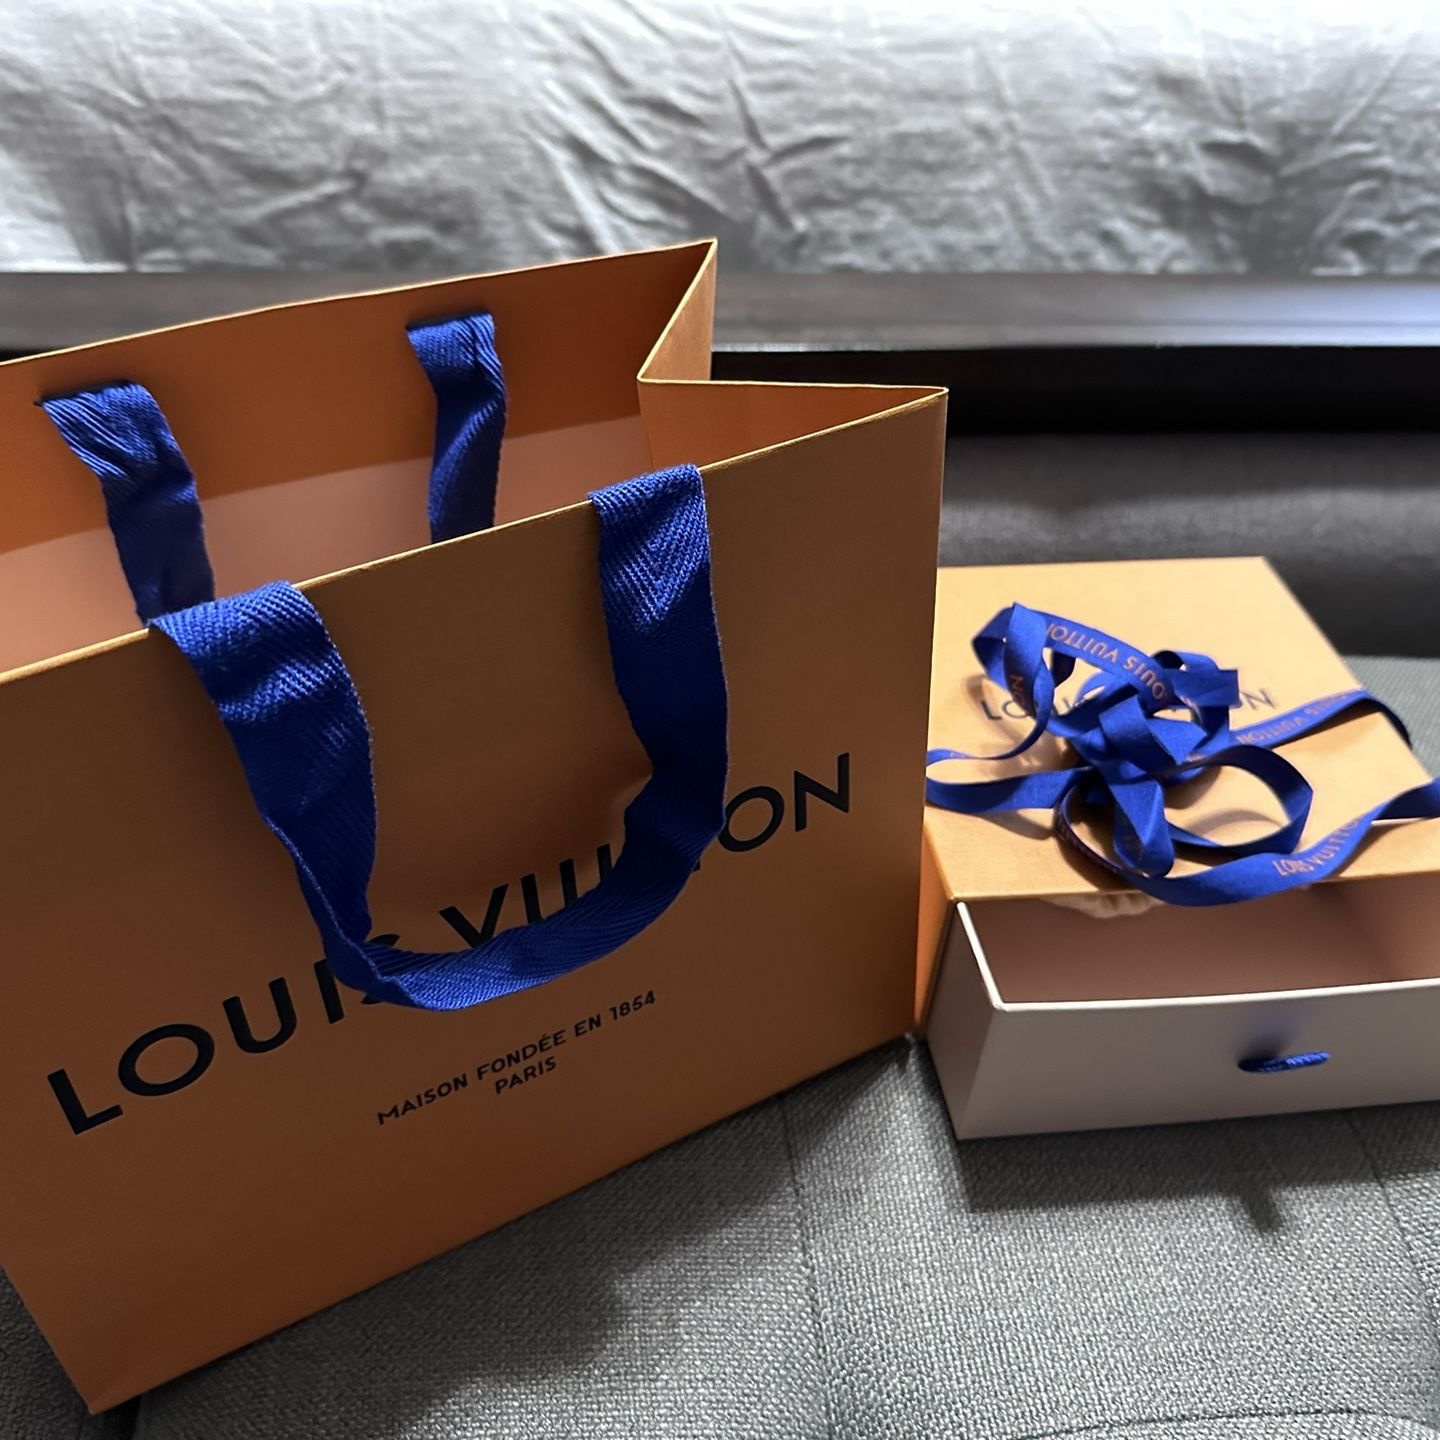 LV Louis Vuitton Socks for Sale in Las Vegas, NV - OfferUp